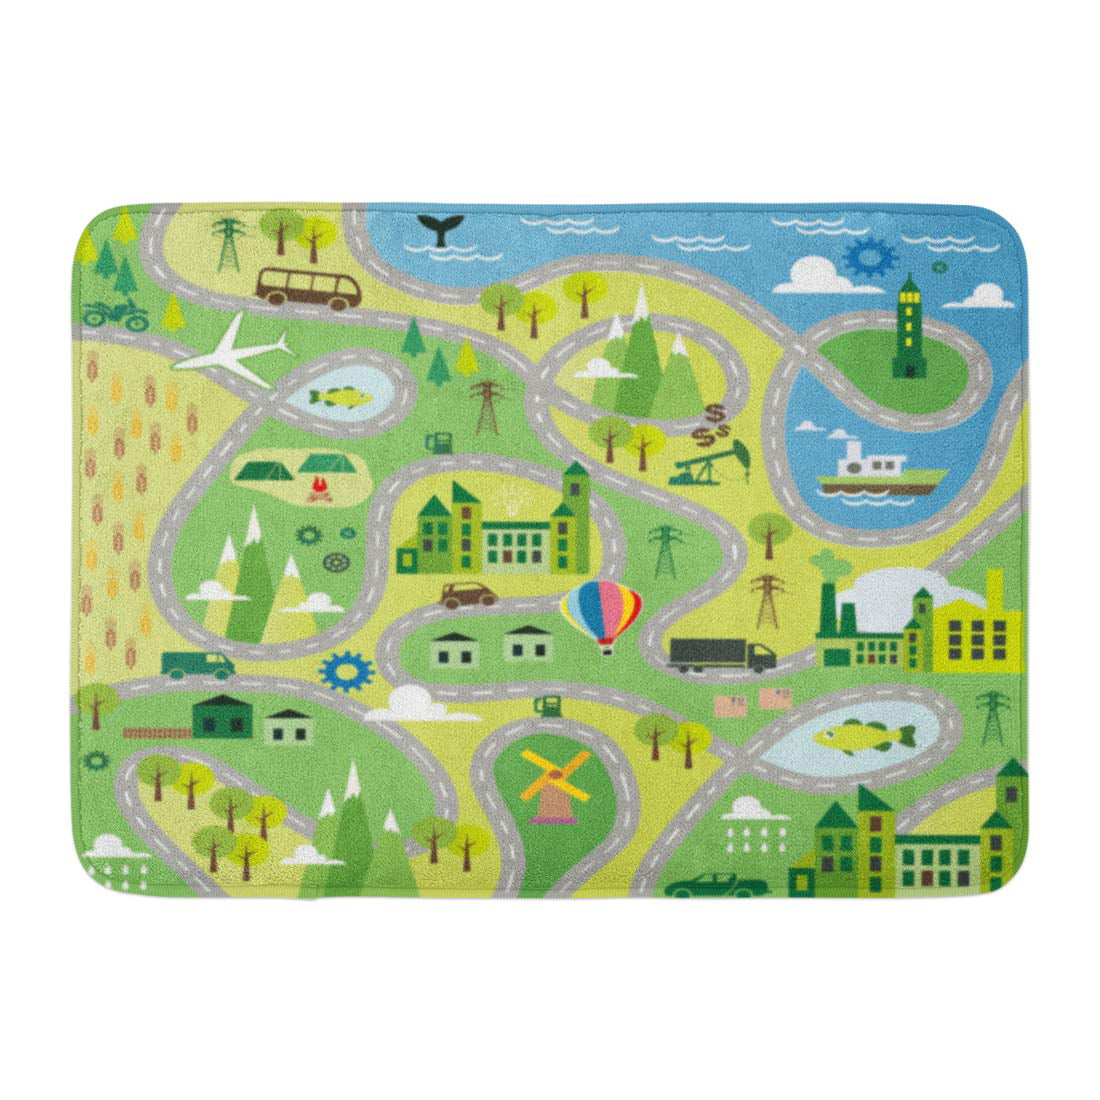 GODPOK Street City Cartoon Map with Roads Game Village Rug Doormat Bath Mat   inch 